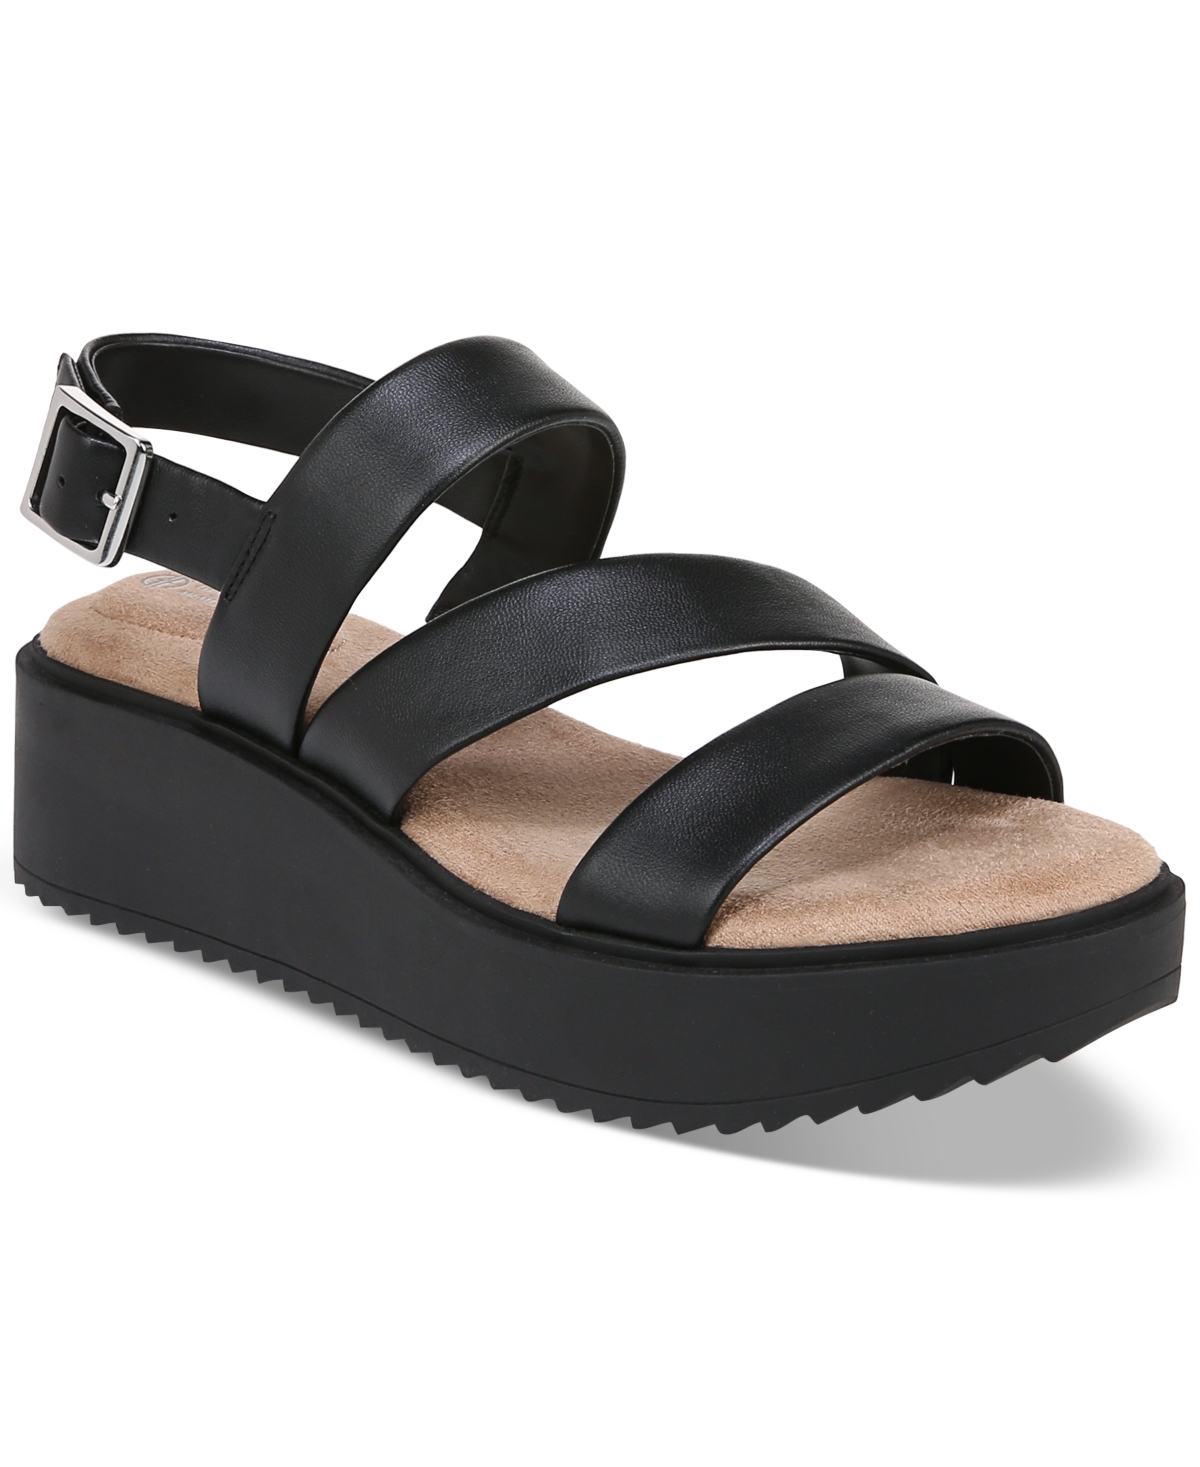 Cessey Memory Foam Flatform Wedge Sandals, Created for Macy's - Platino